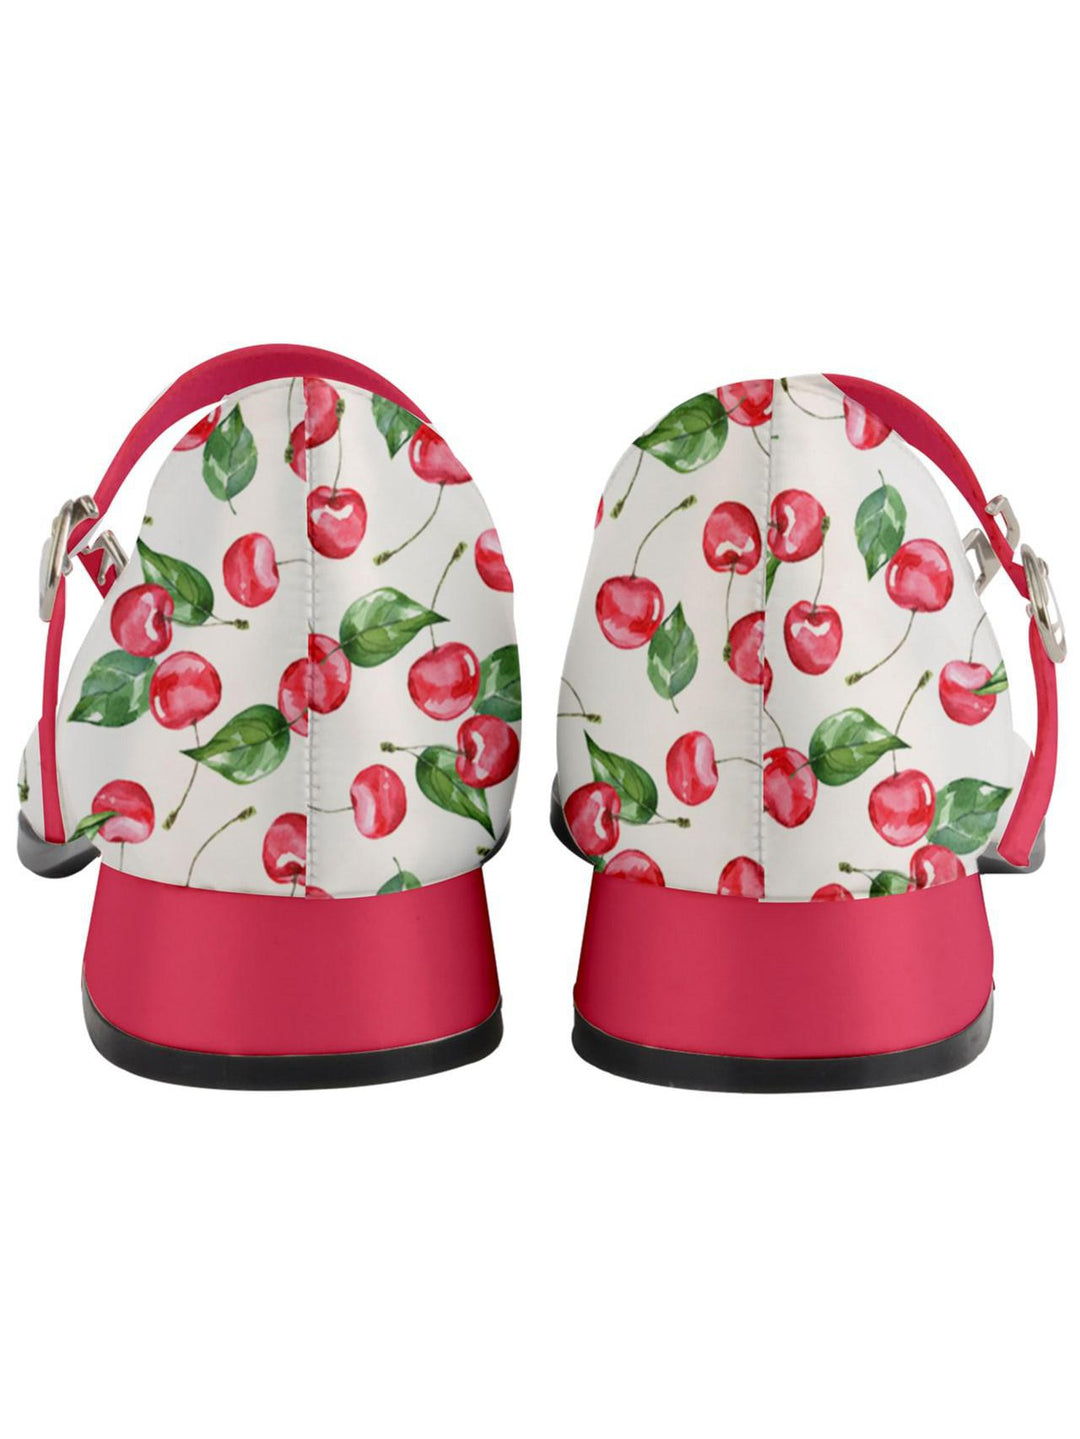 Watercolour Cherries Women's Mary Jane Shoes